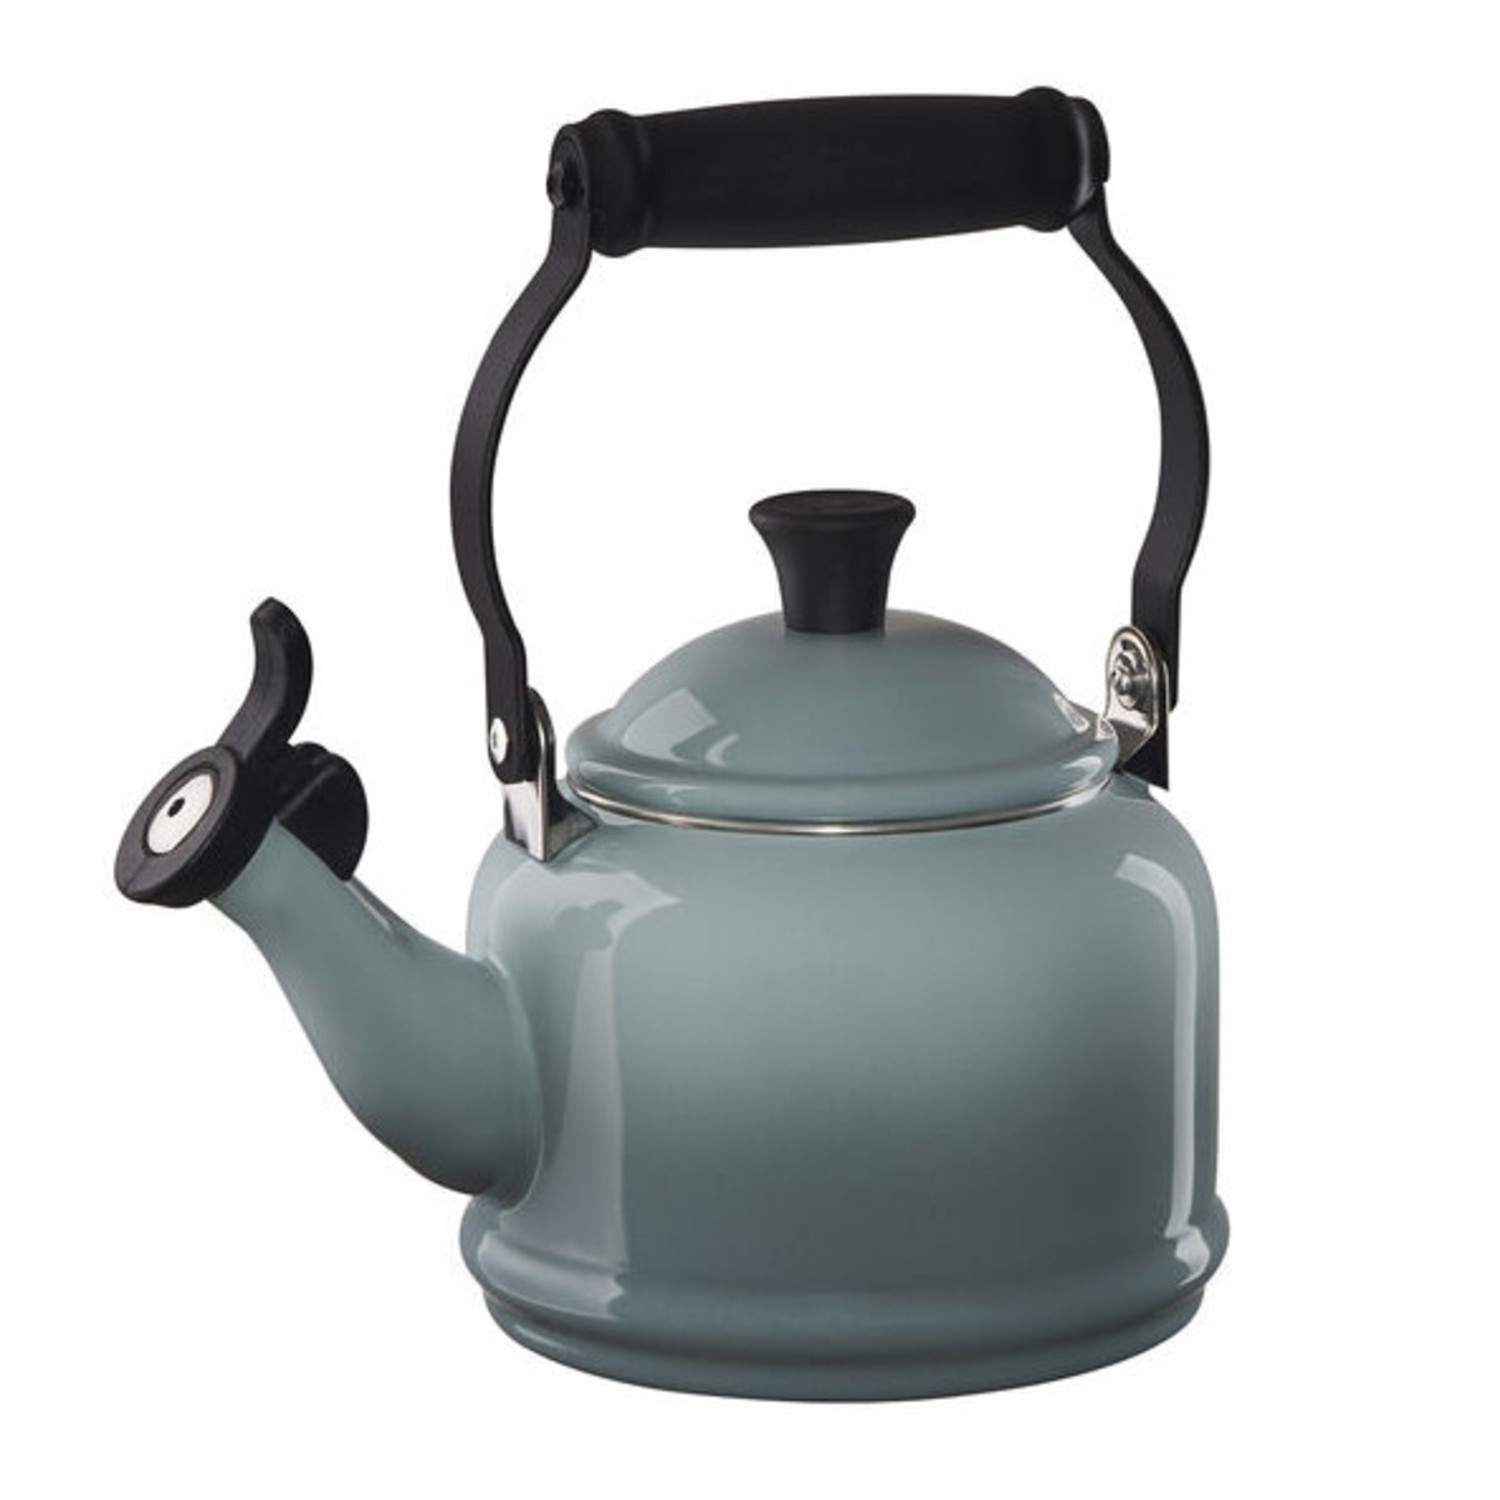 https://cdn.shoplightspeed.com/shops/633447/files/51618024/1500x4000x3/le-creuset-125-quart-sea-salt-whistling-tea-kettle.jpg